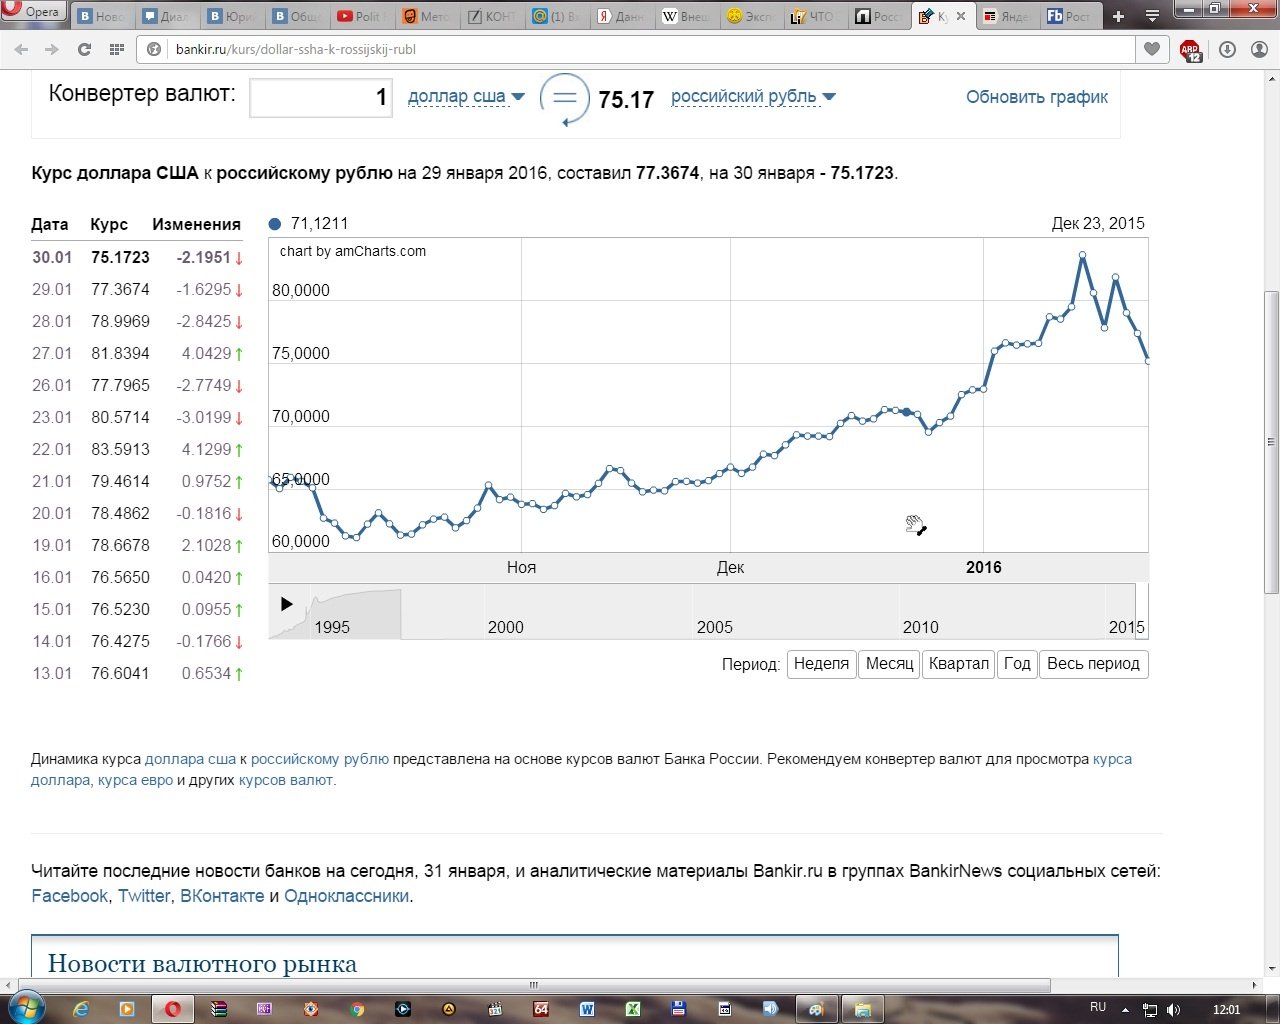 График курса валют доллар рубль. Курс рубля график. Курс доллара в 1995 году. Курс евро в 2005 году. Курс валют график.